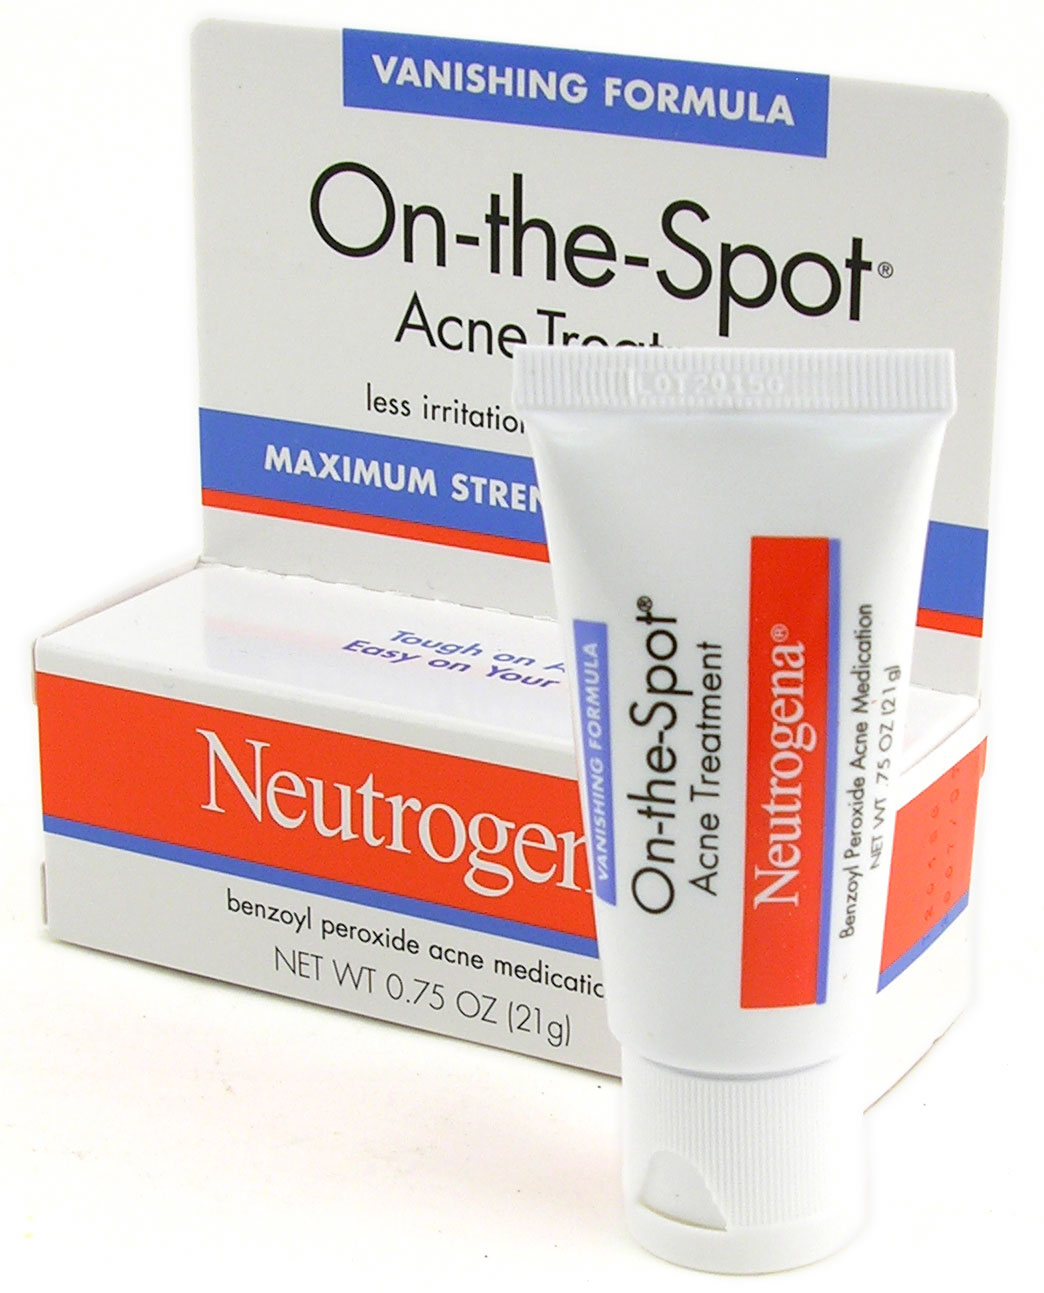 Acne Skin Care: Neutrogena On-the-Spot Acne Treatment Review